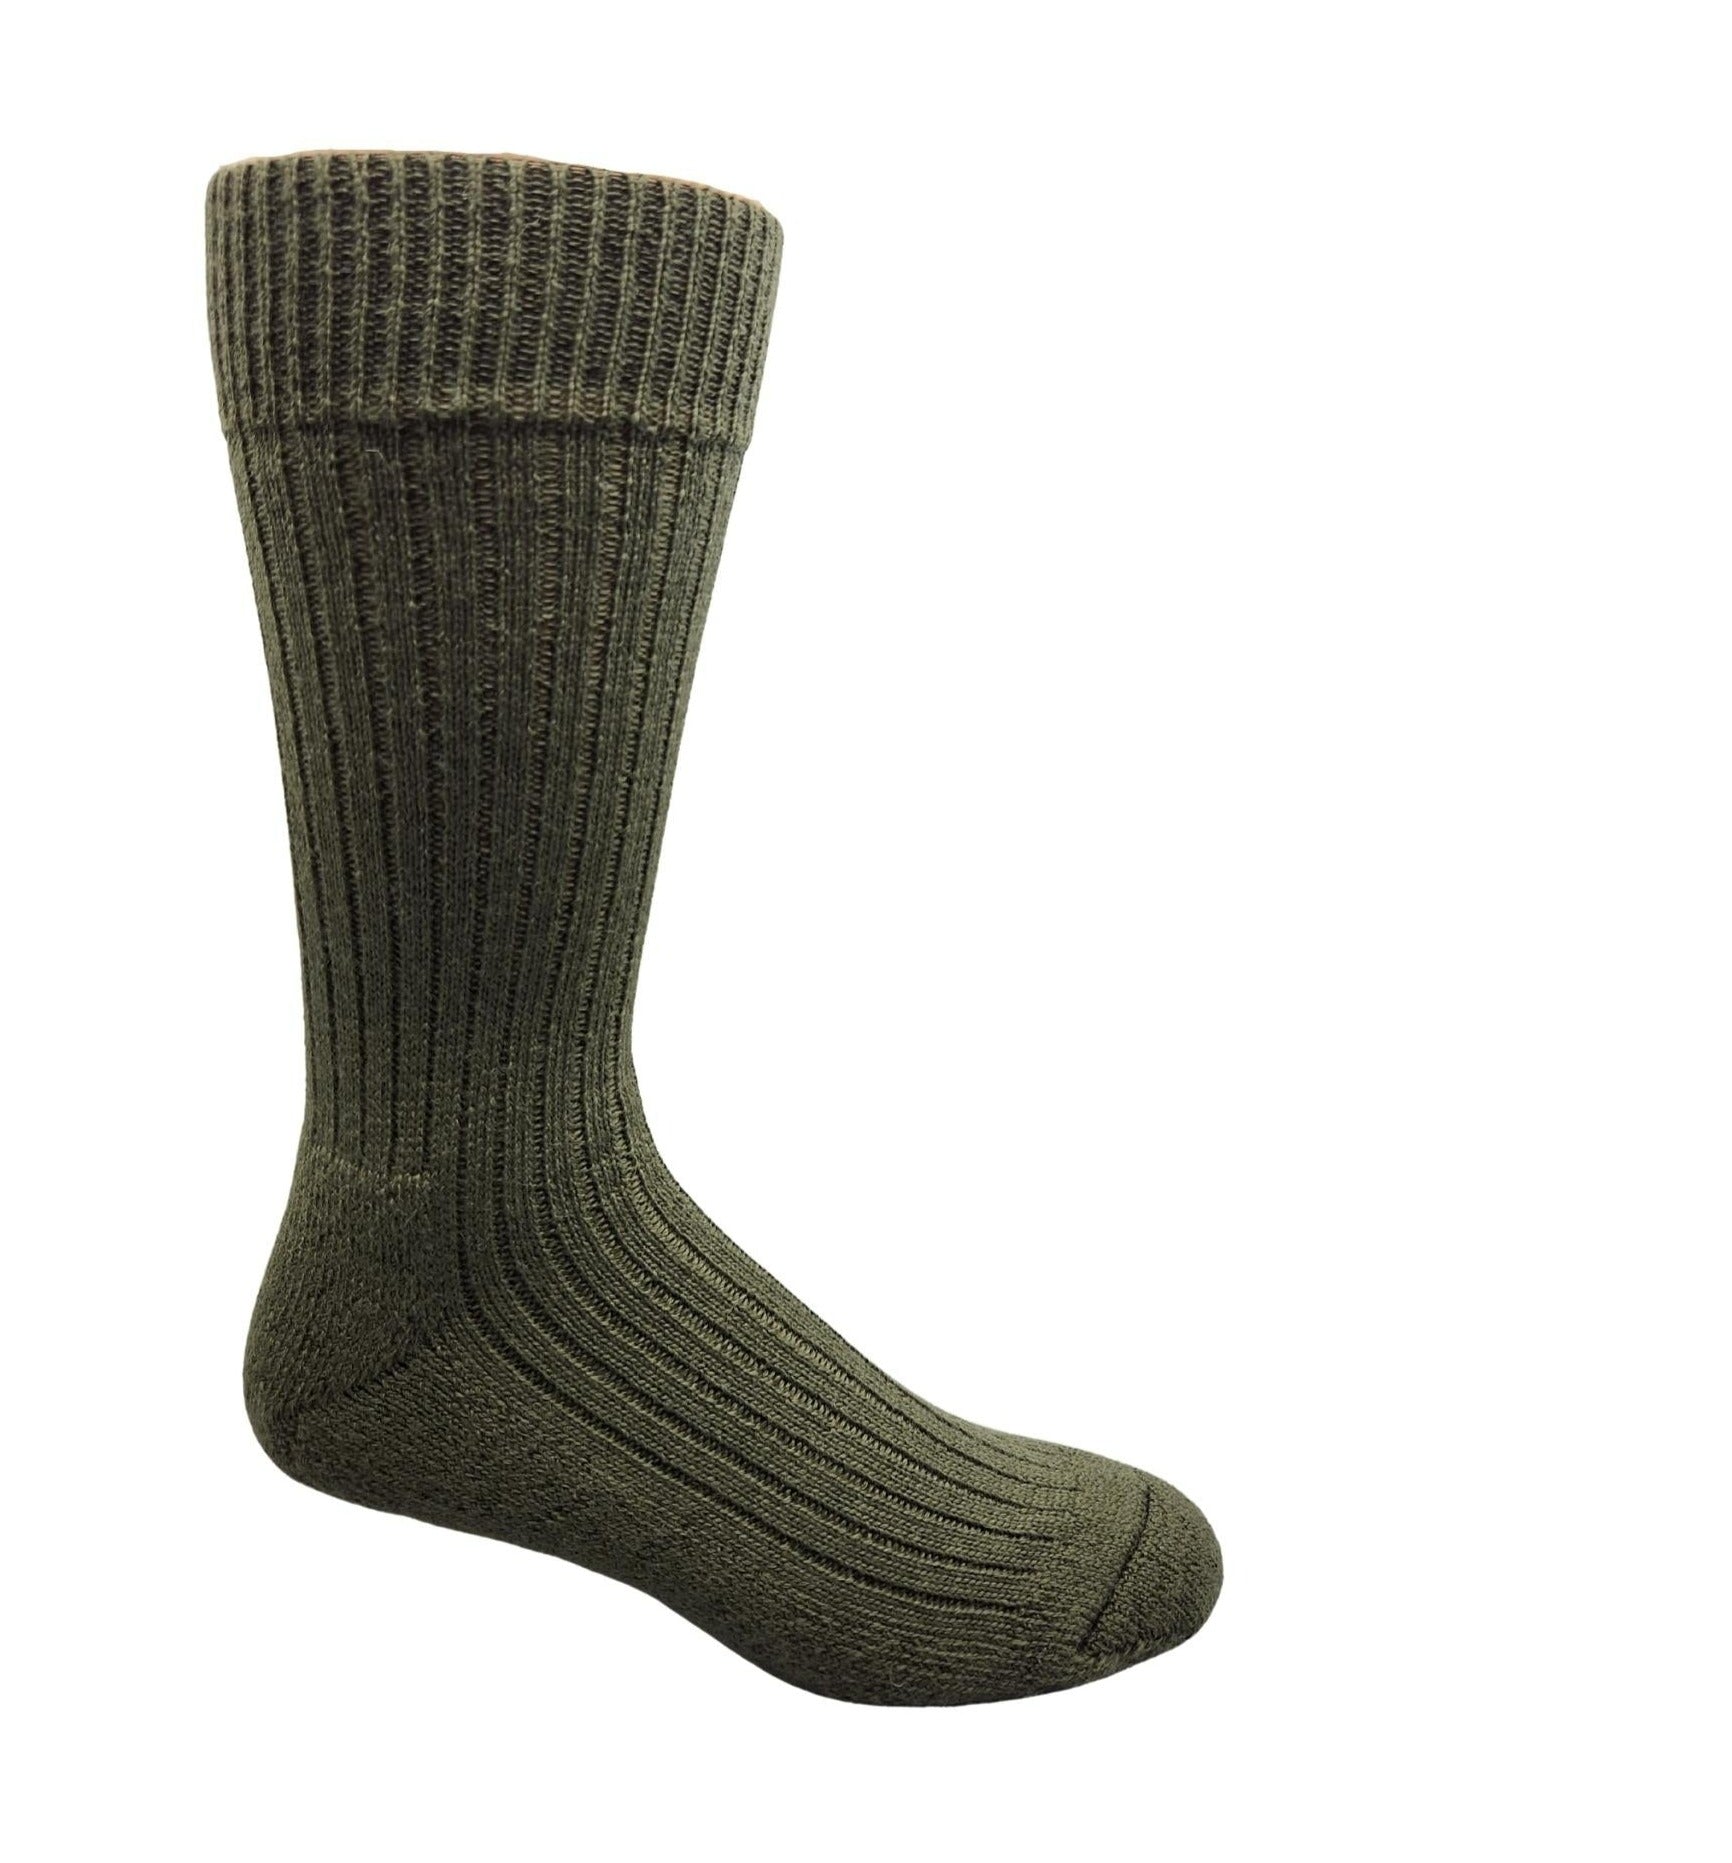 BomKinta Boot Socks for Men - Solid Winter Socks Thick Warm Work Socks Size  7-12